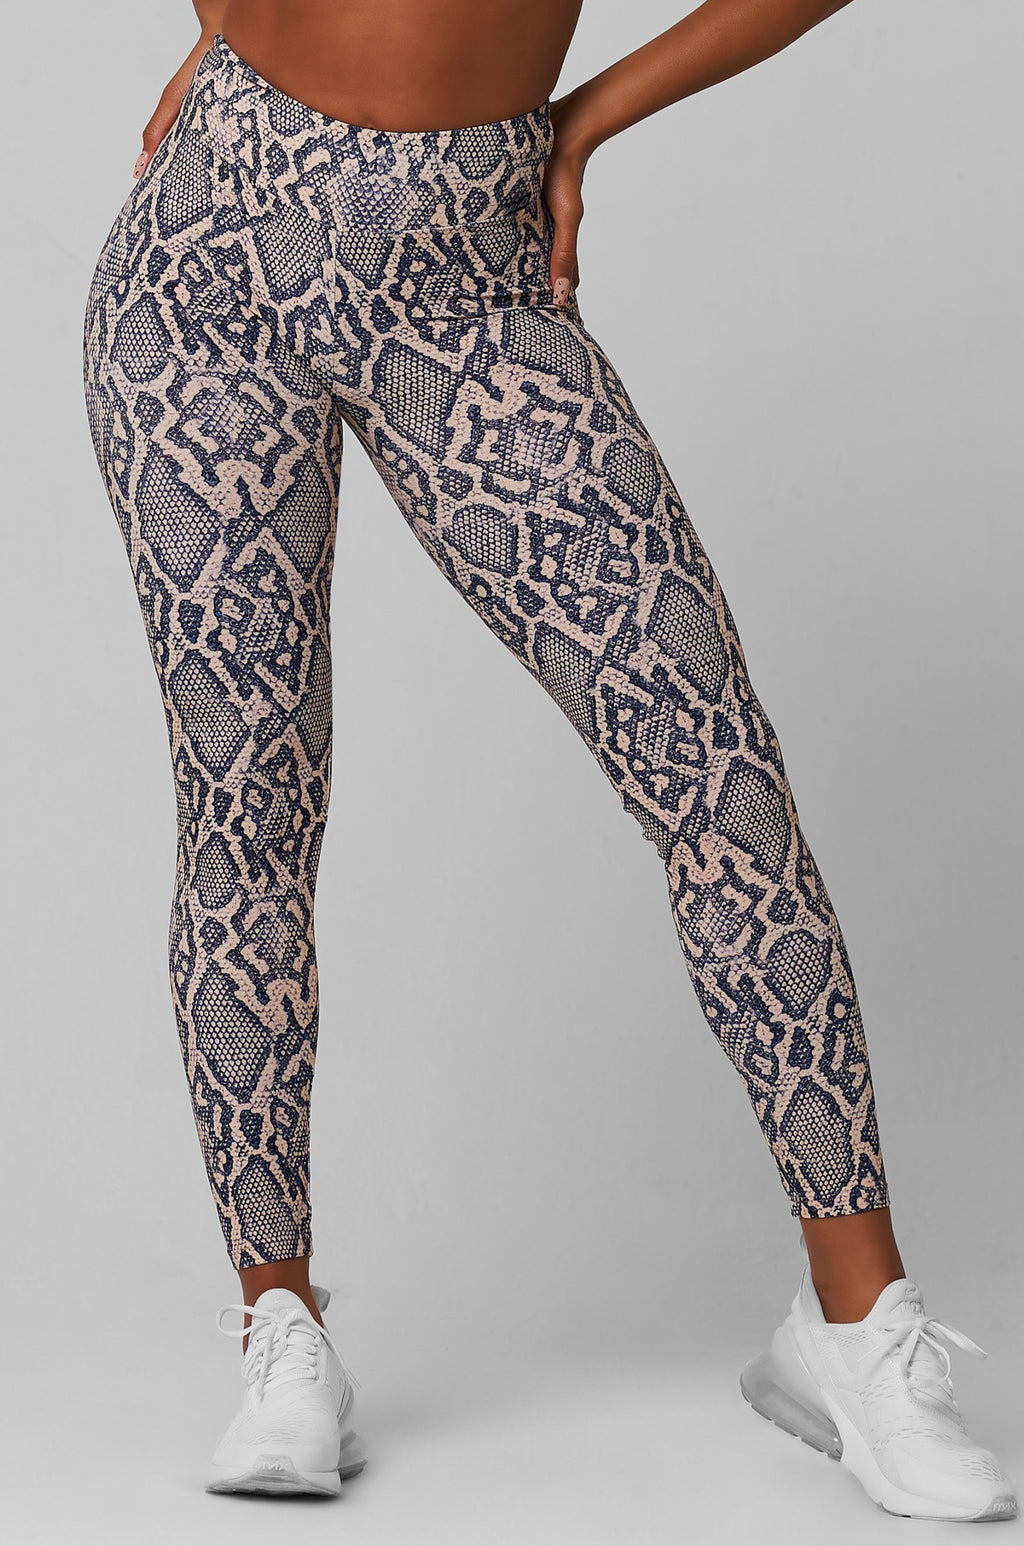 Snake Skin Python Pattern Women's Yoga Pants with Pockets High